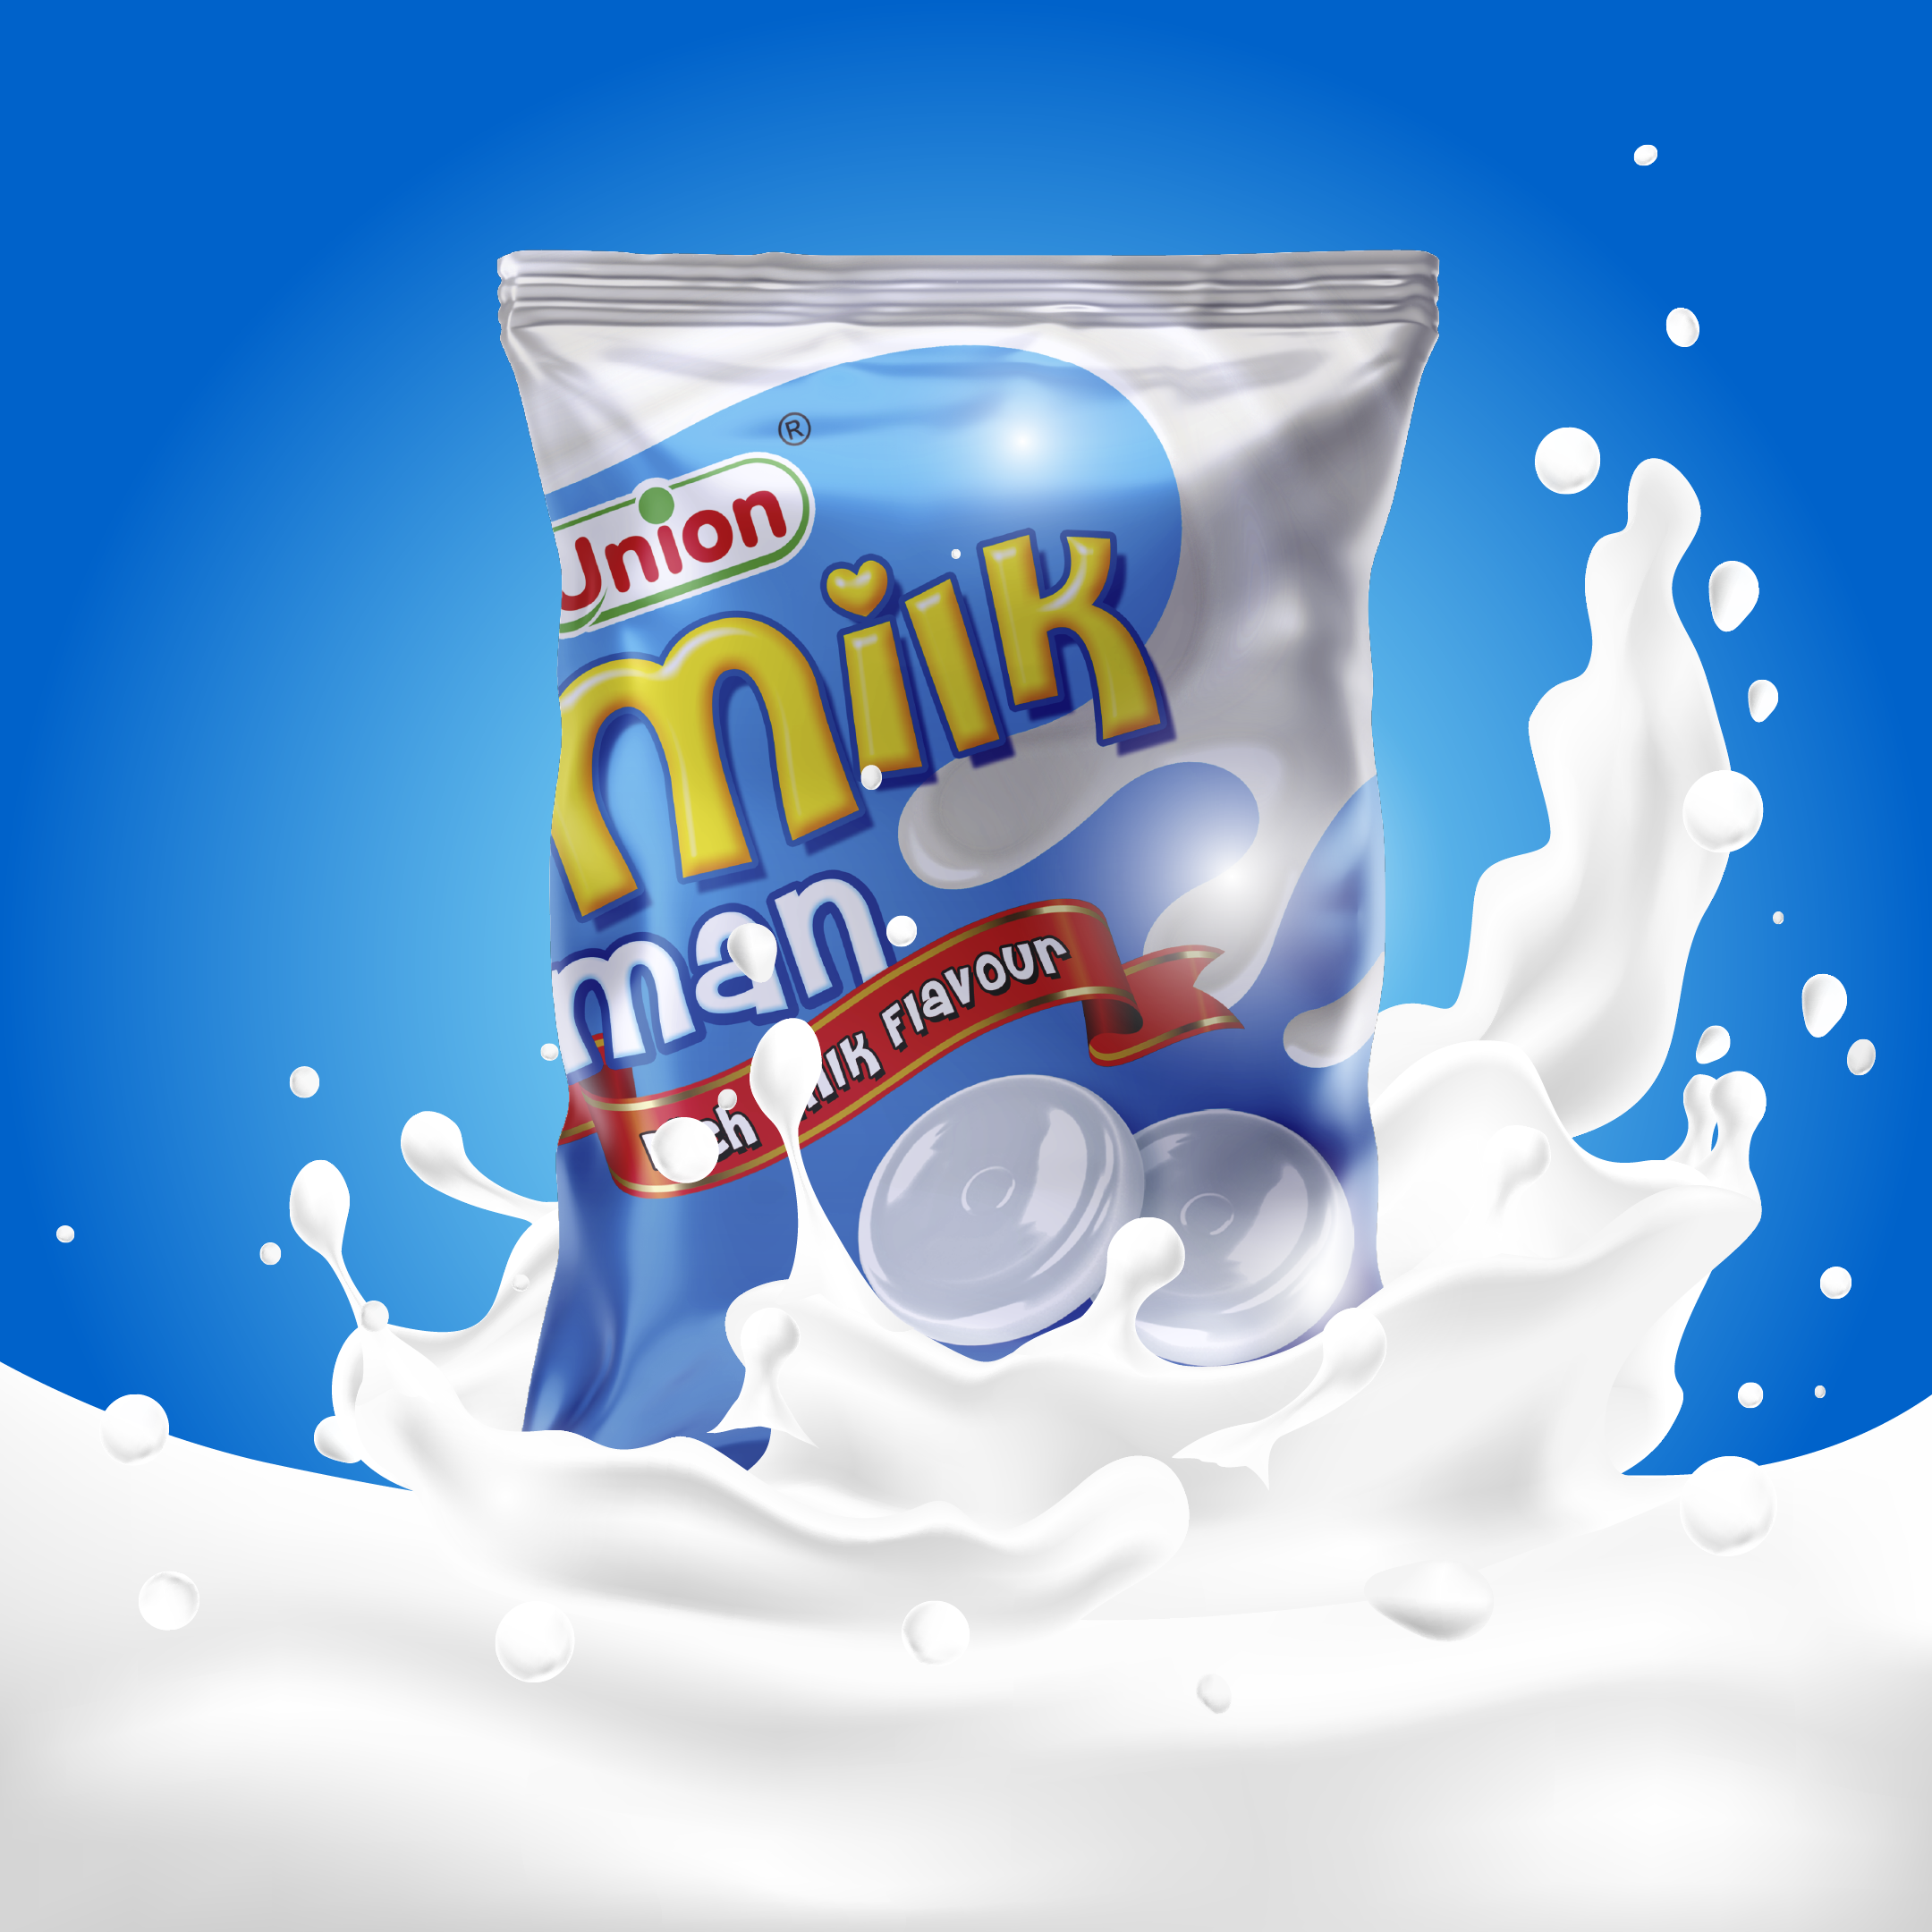 Union Milk Man